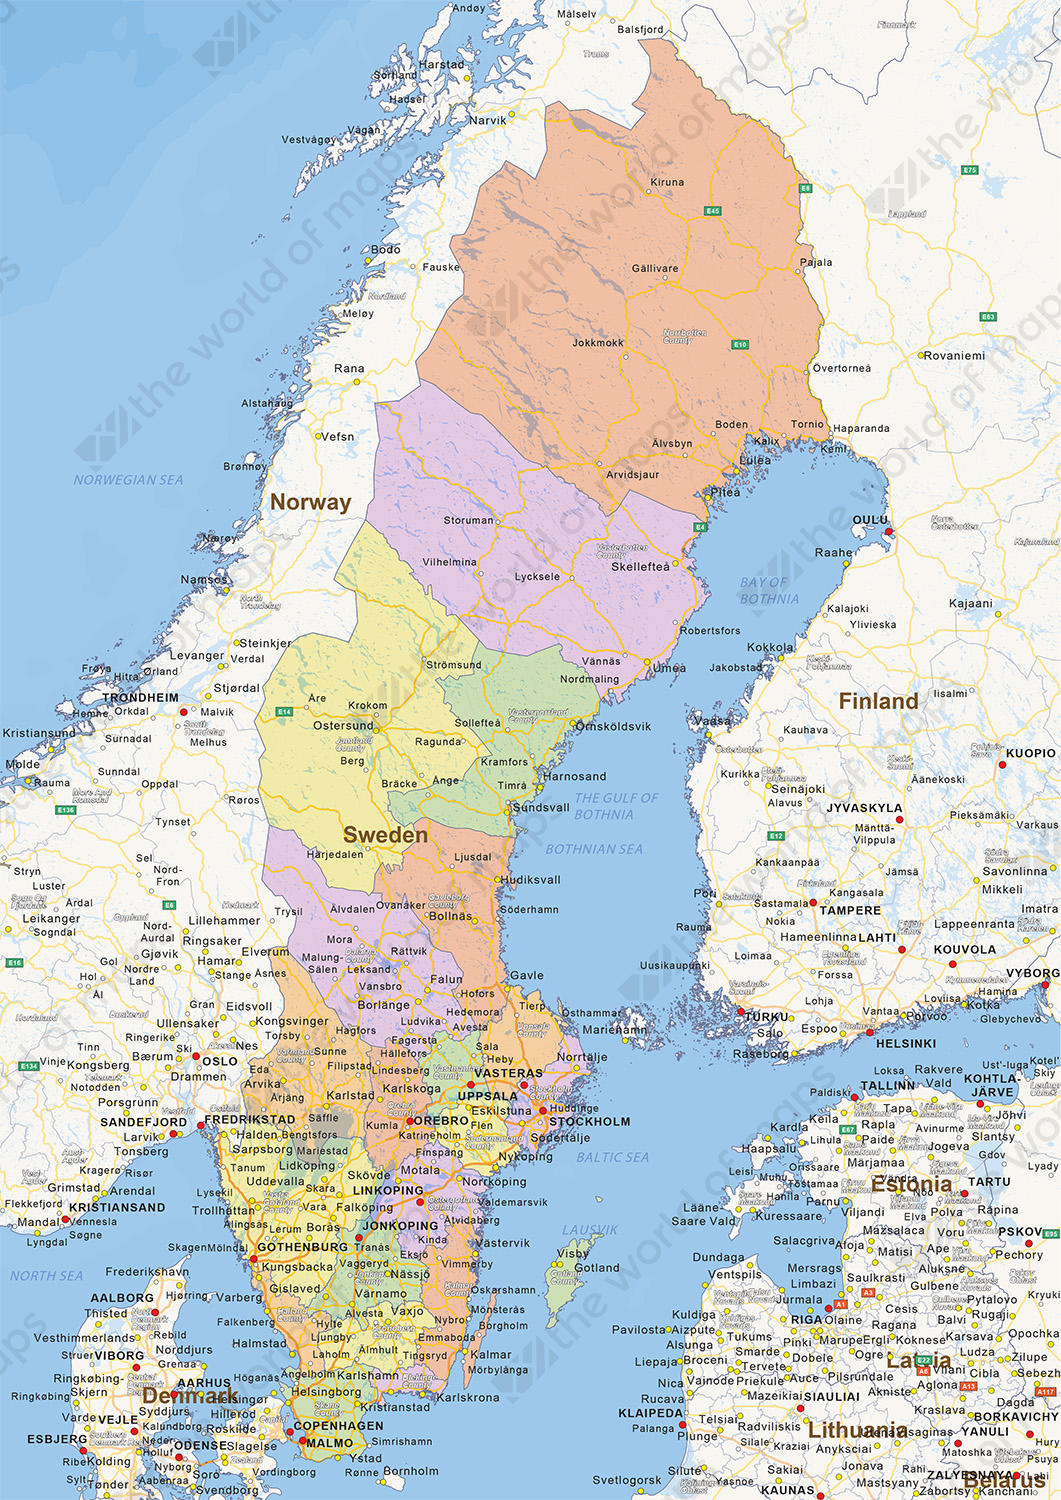 Digital political map of Sweden 1472 | The World of Maps.com